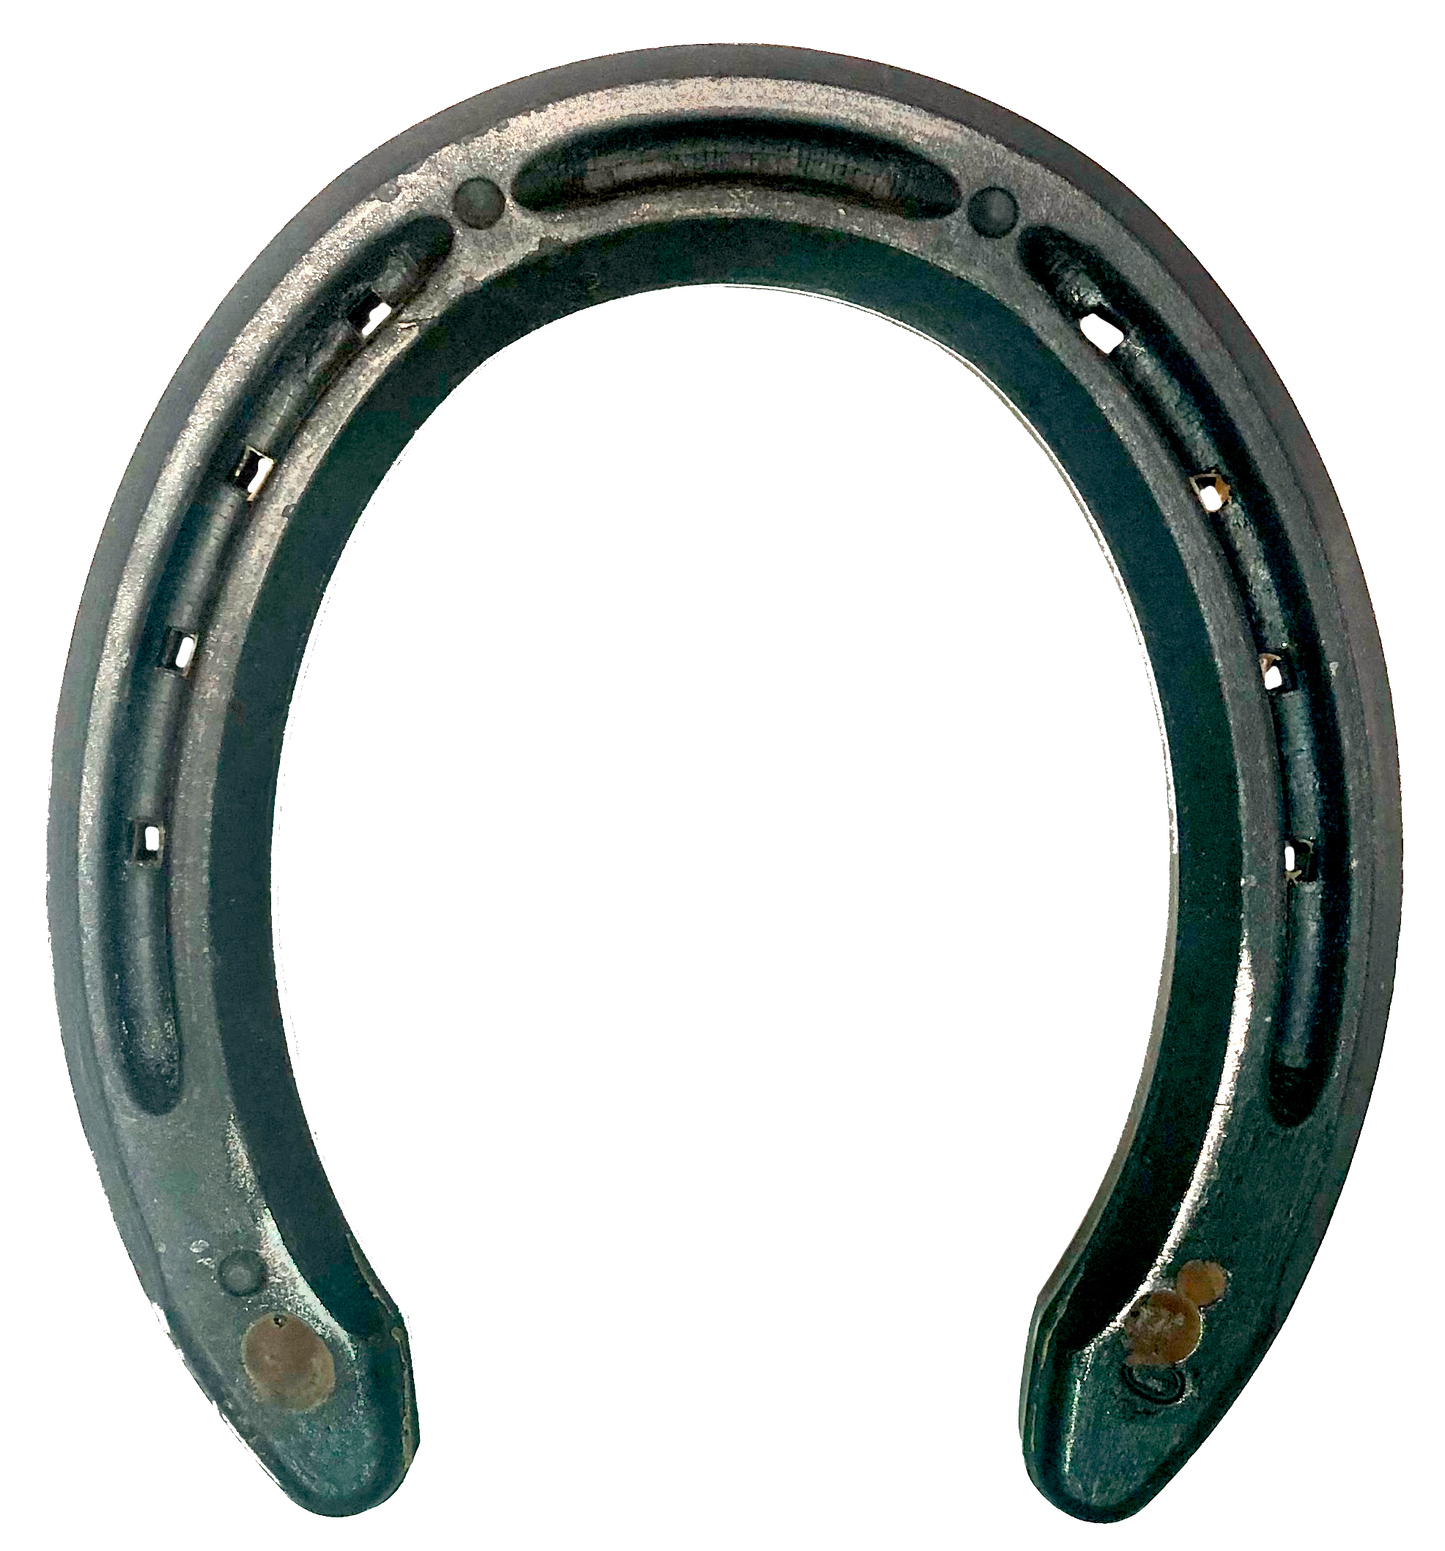 Quarter barrel forged shock absorbing horseshoes